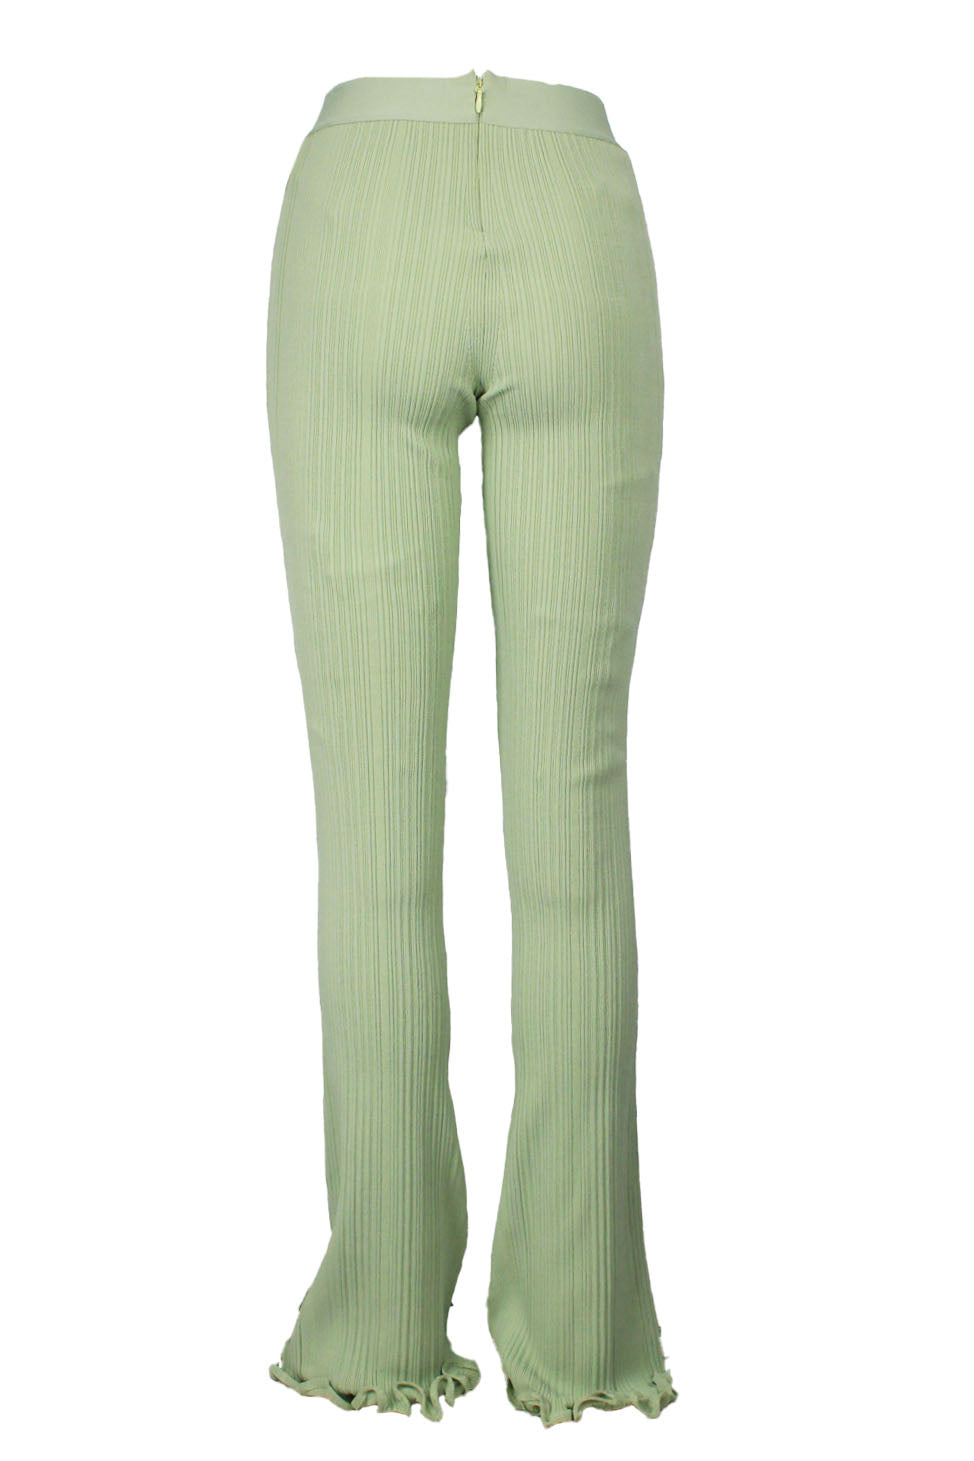 back of green pants. showing zipper closure at back. 